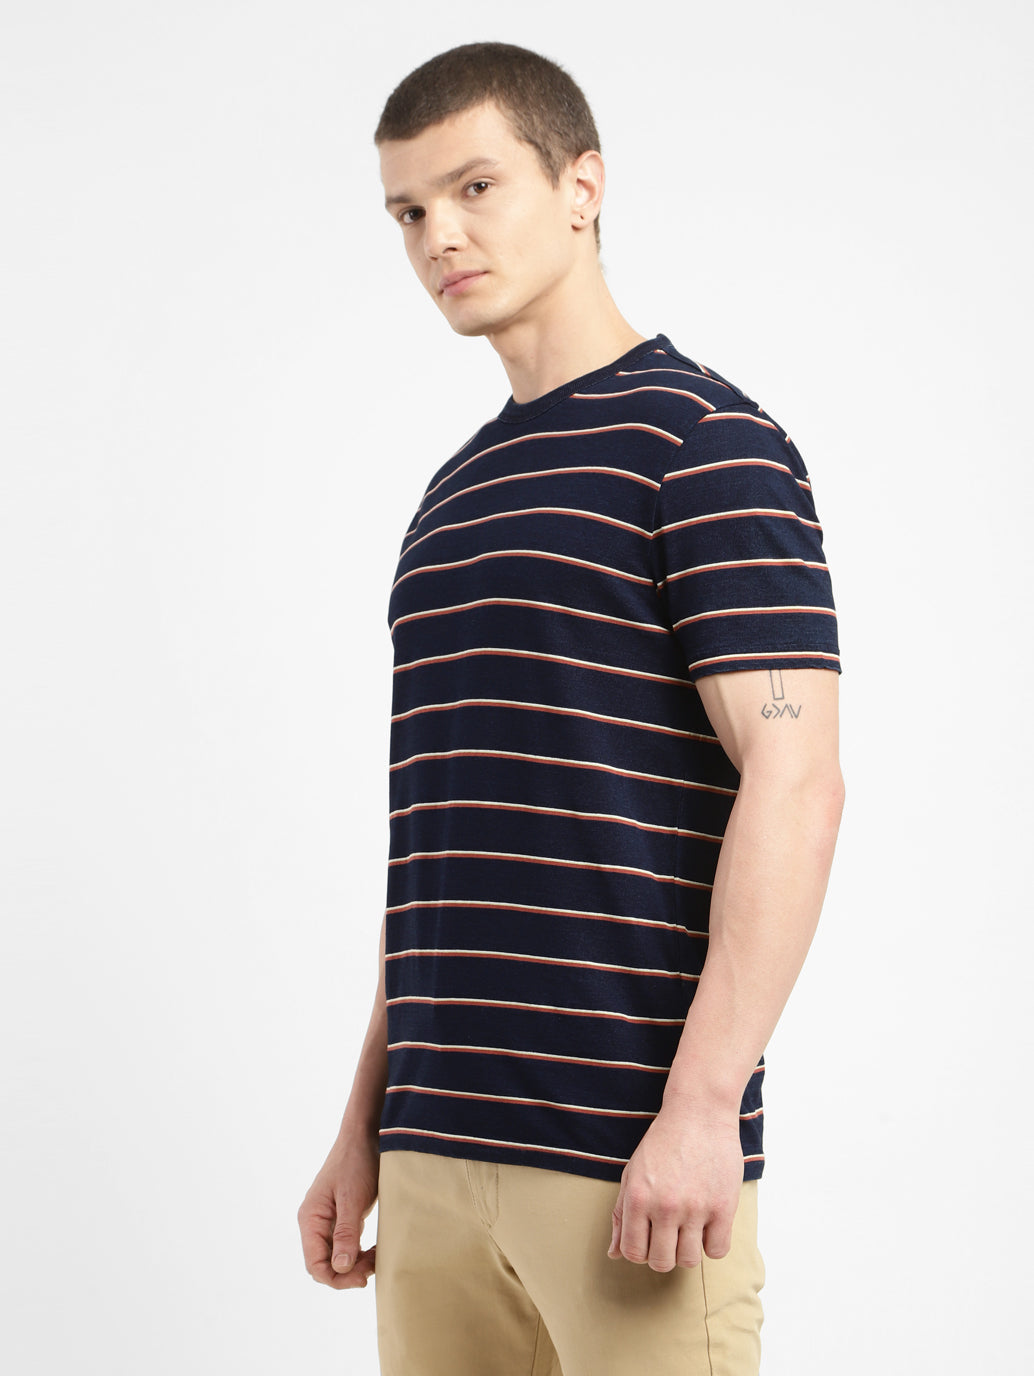 Men's Striped Slim Fit T-shirt